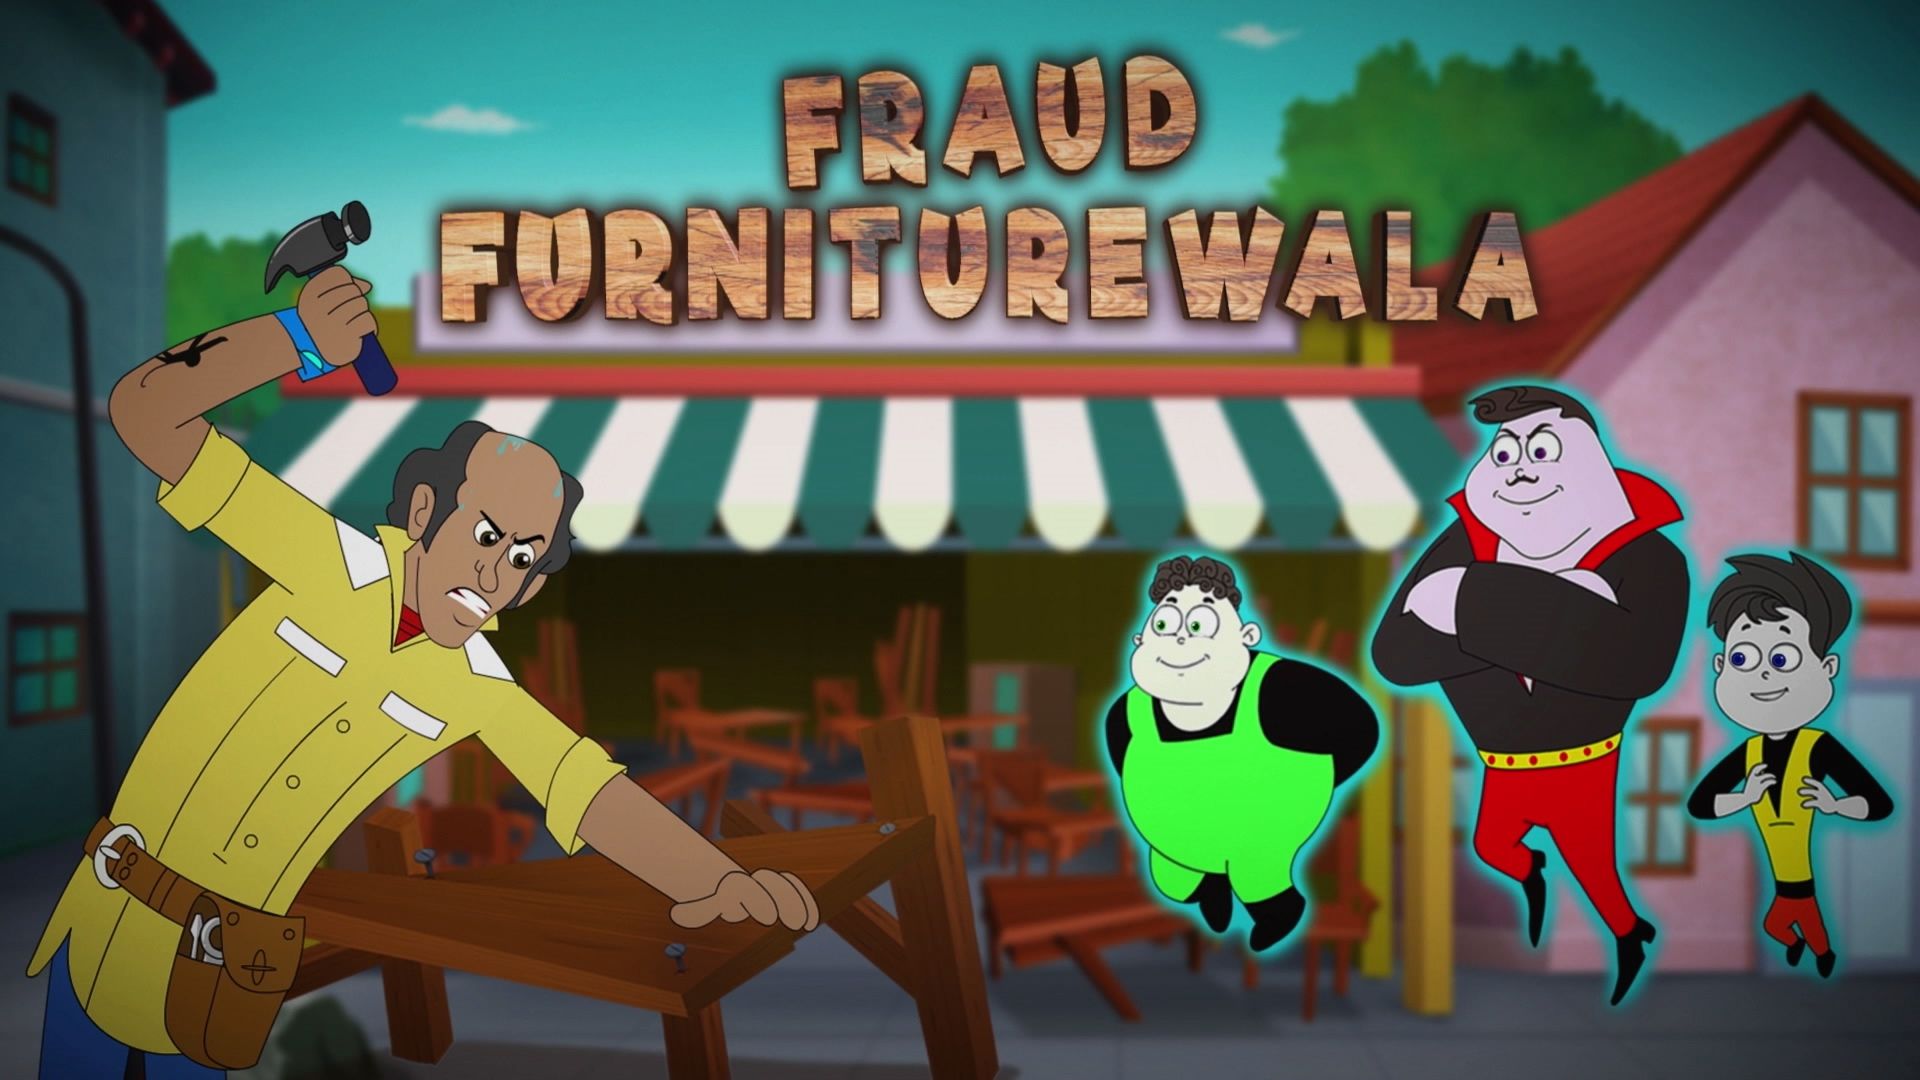 Fraud Furniture-wala